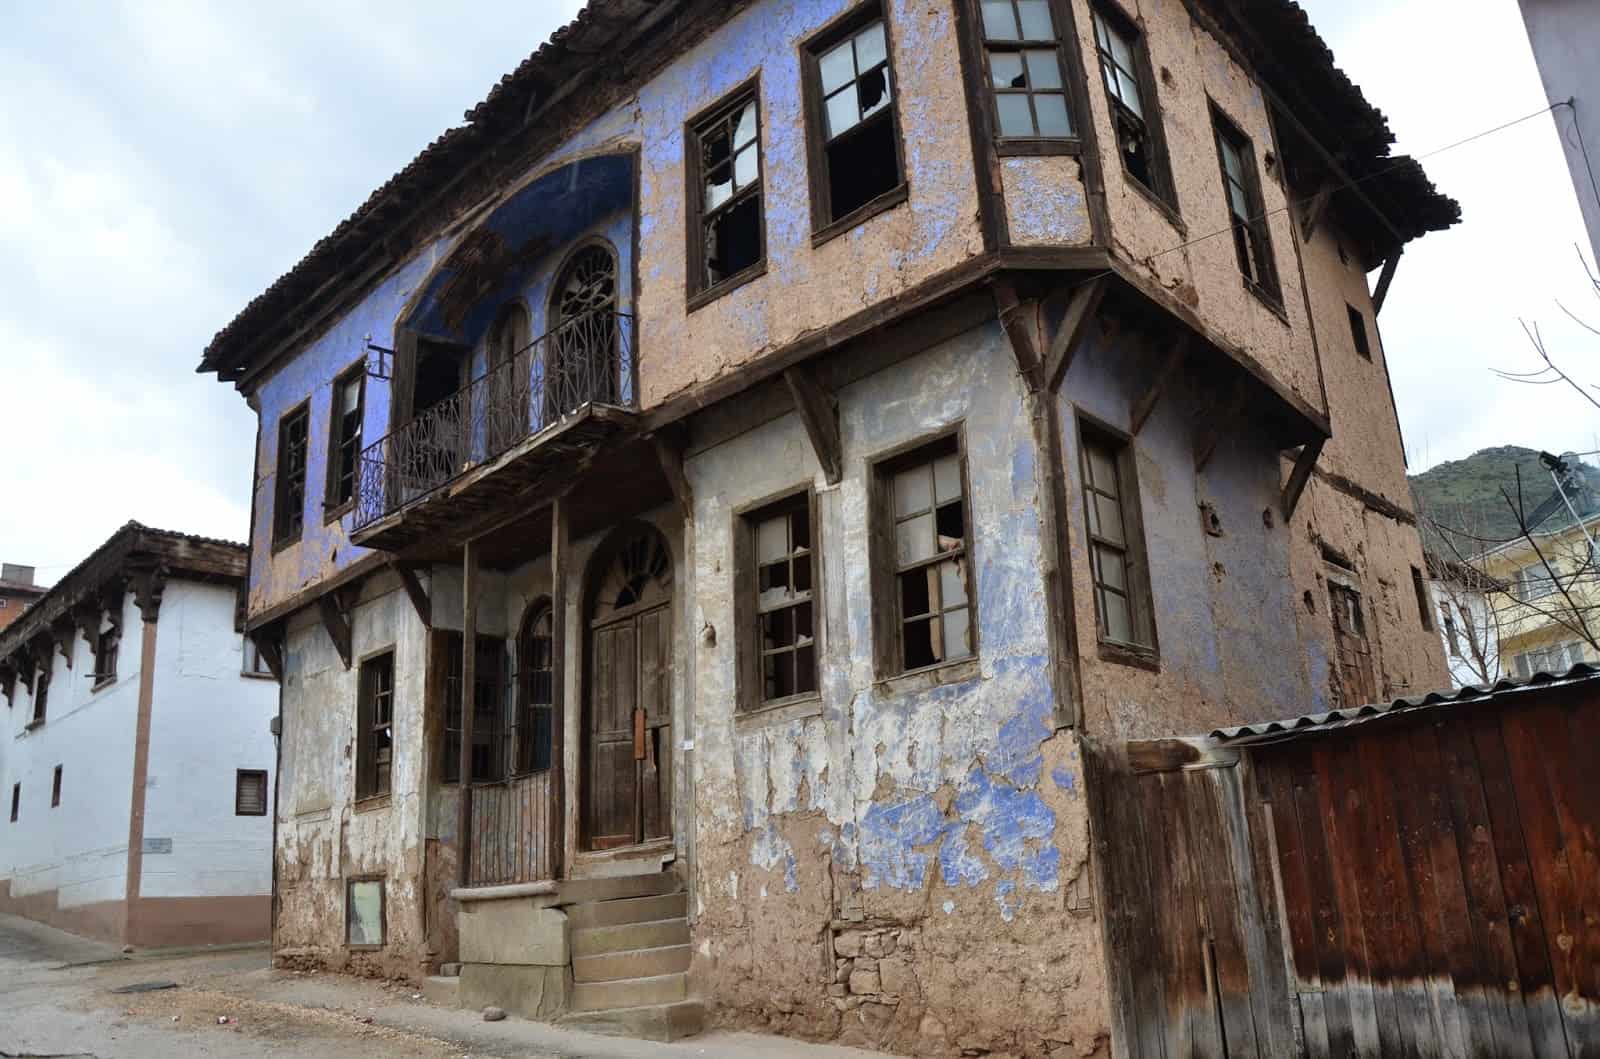 Ottoman home in Osmaneli, Turkey